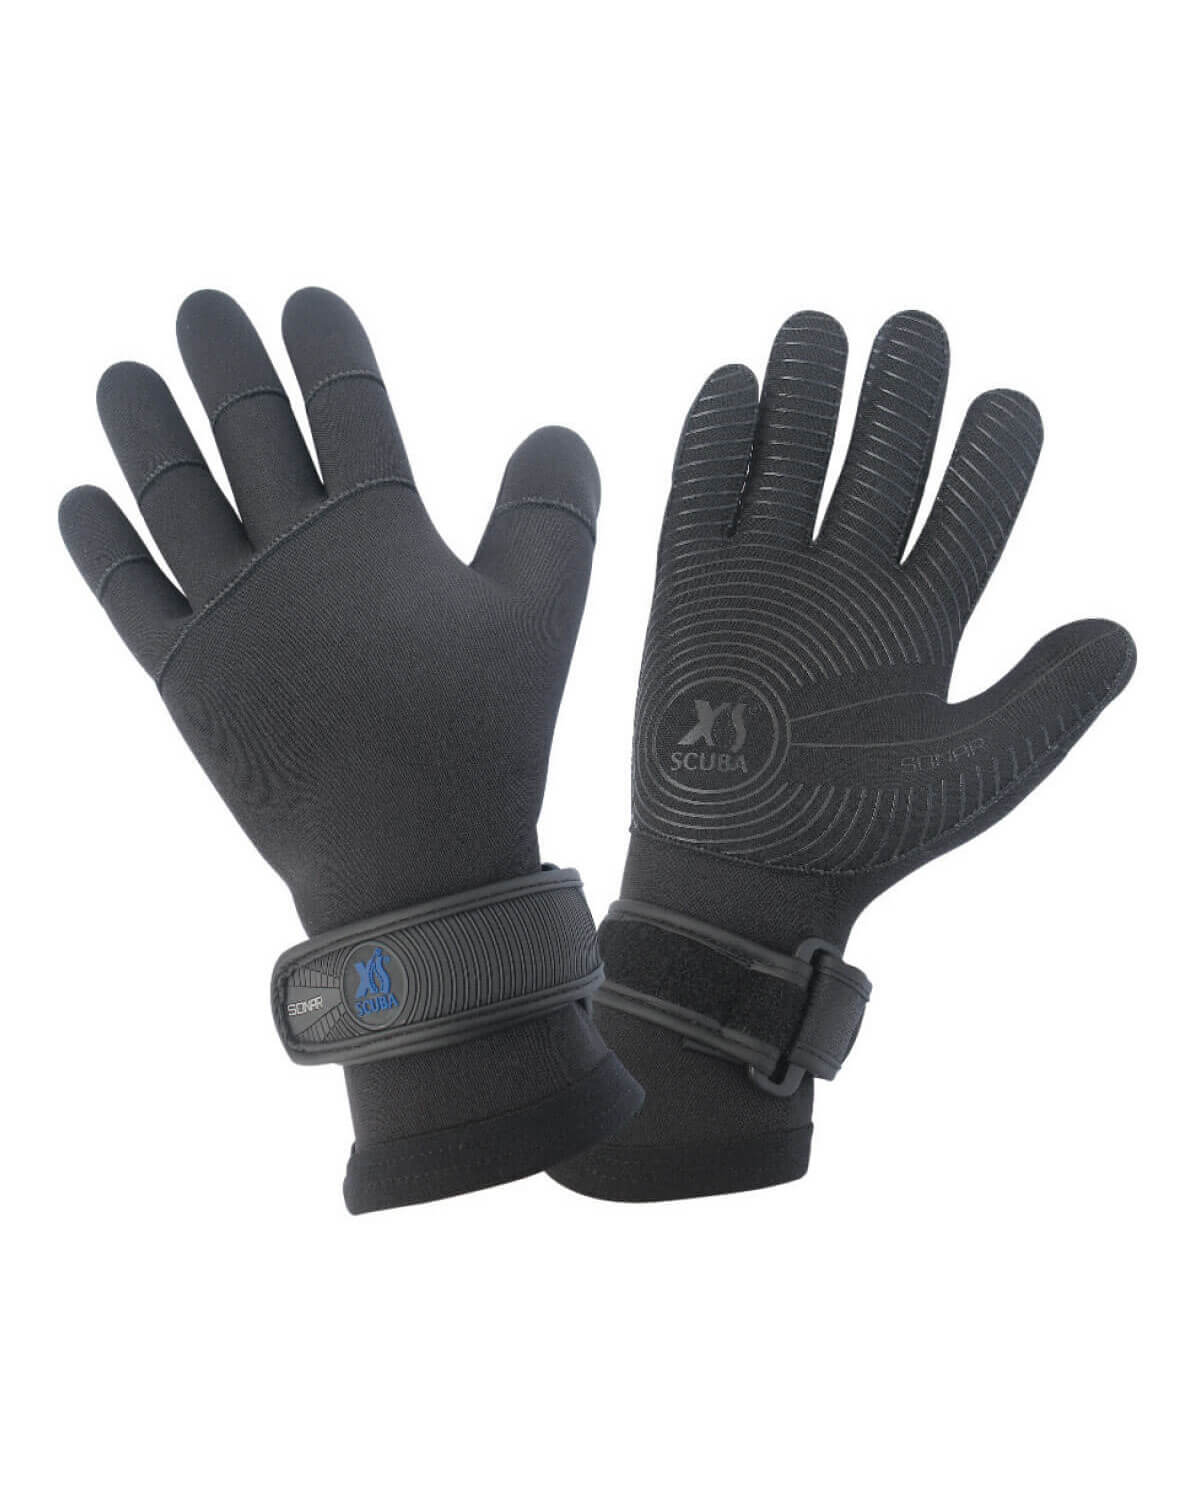 5mm XS SCUBA Sonar Wetsuit Gloves